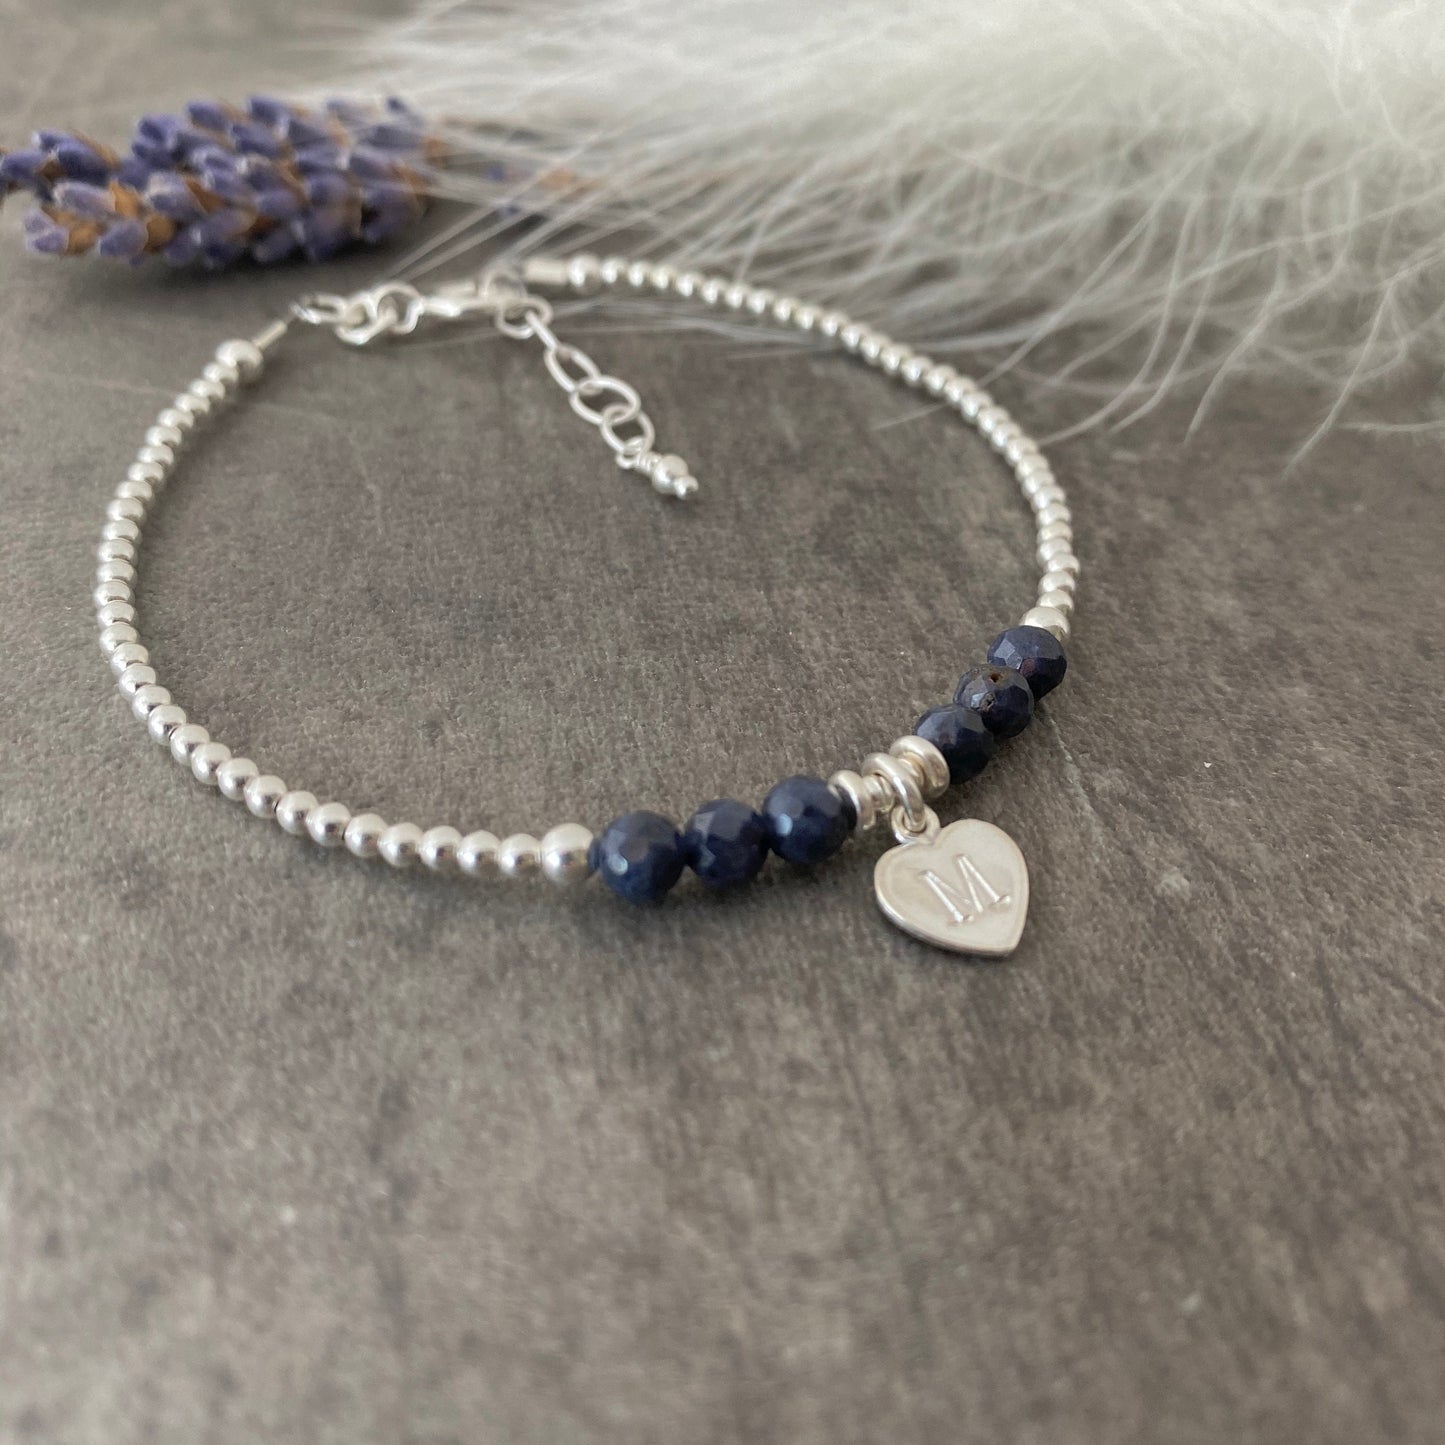 Personalised September Birthstone Bracelet, Dainty Sapphire Bracelet in Sterling Silver